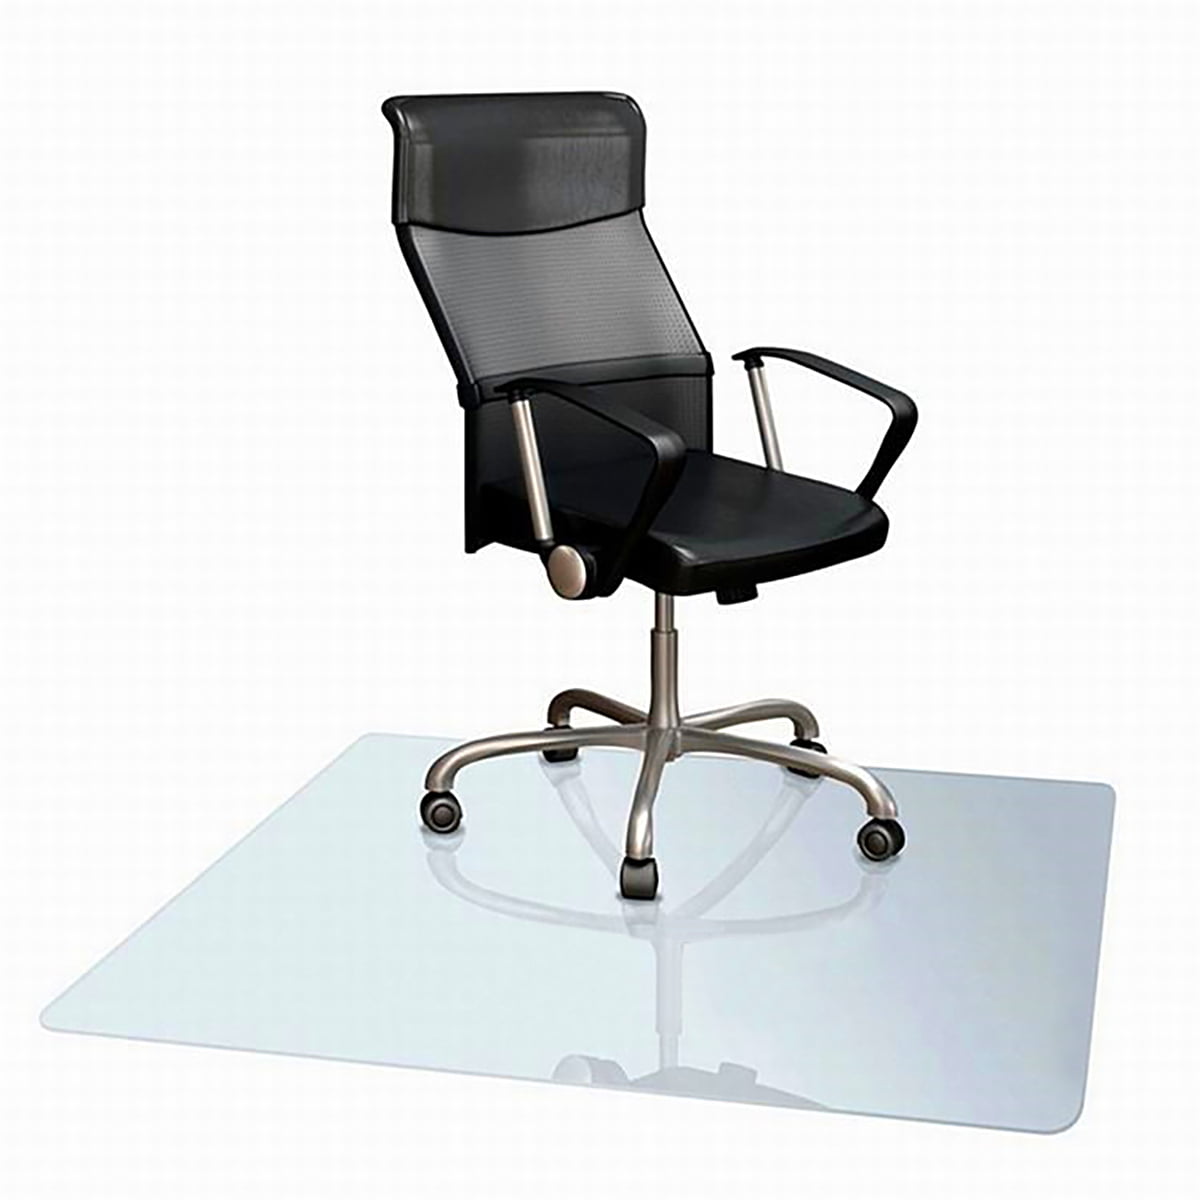 Details about   Thicken 3mm Home Office Chair Mat PVC Rectangular lip Floor Carpet Protector 